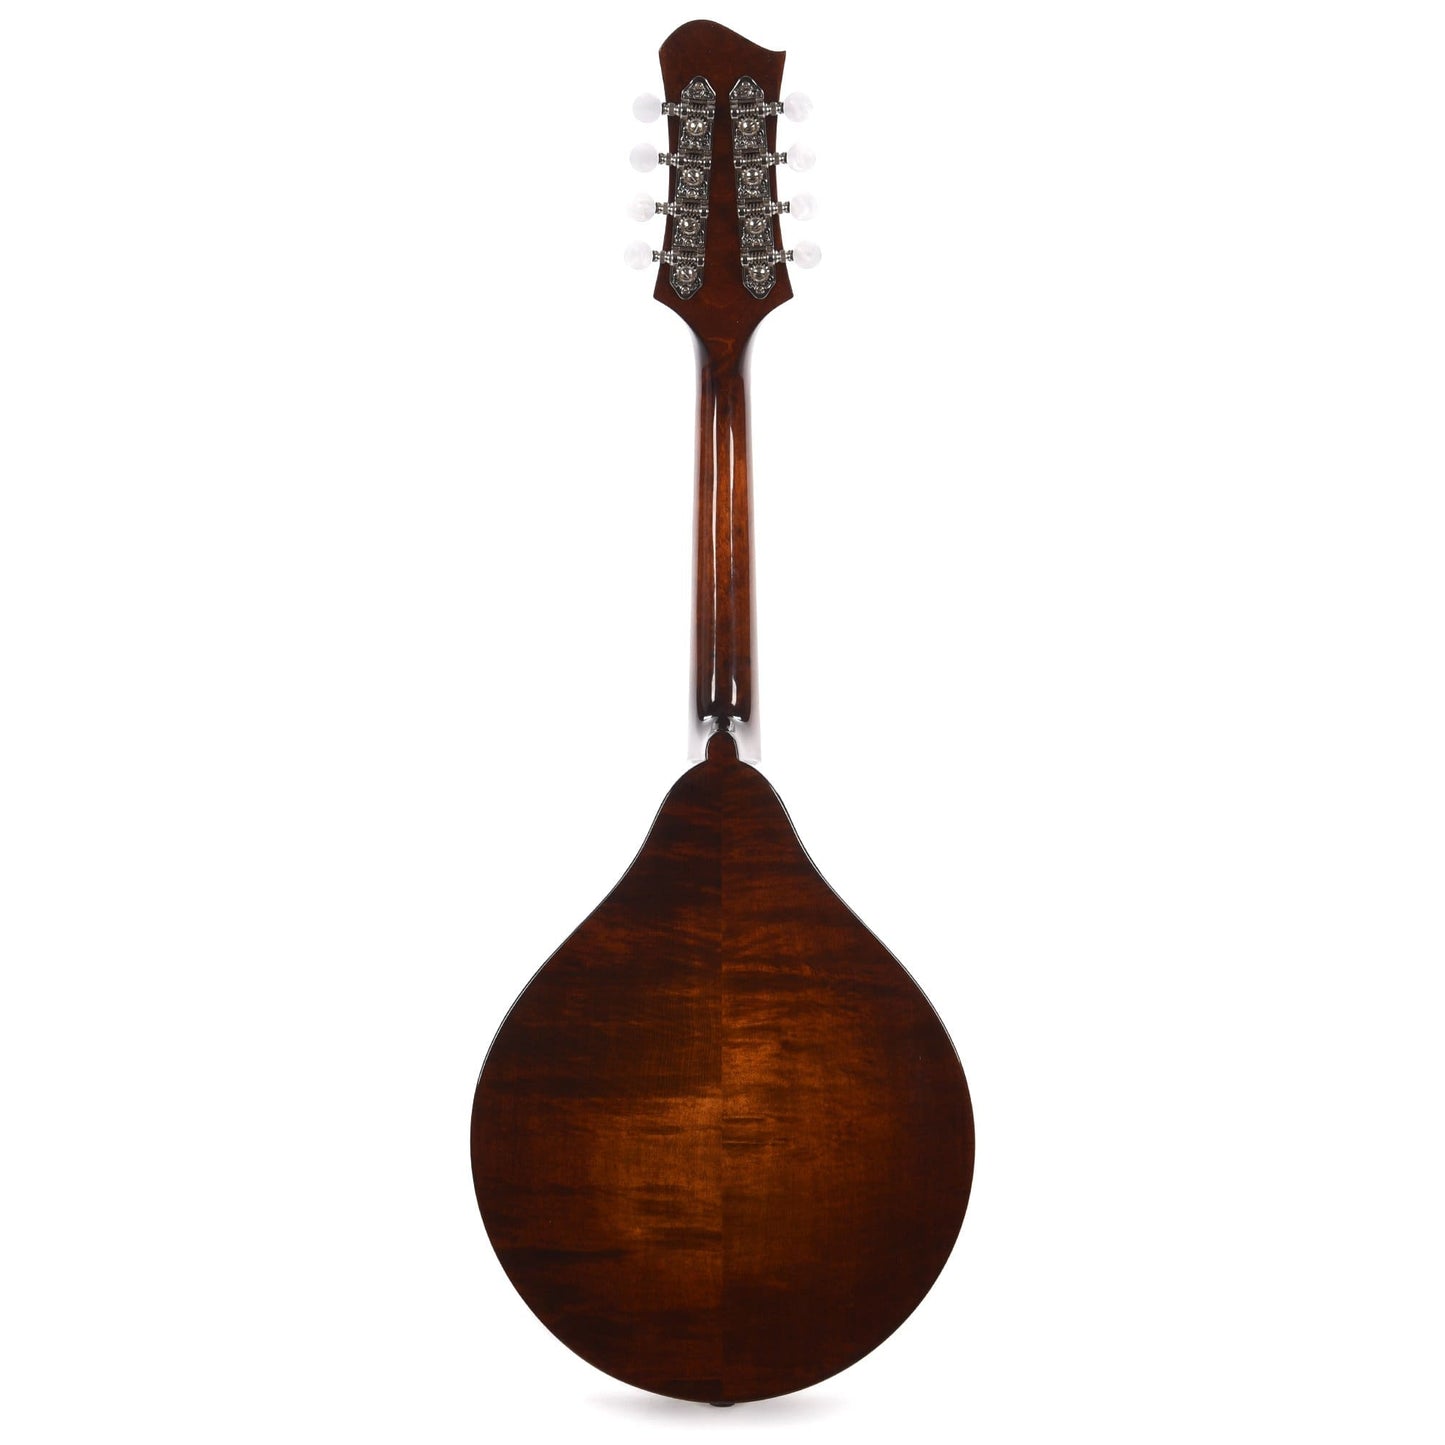 Eastman Spruce/Maple A-Style F-Holes Classic Sunburst Folk Instruments / Mandolins